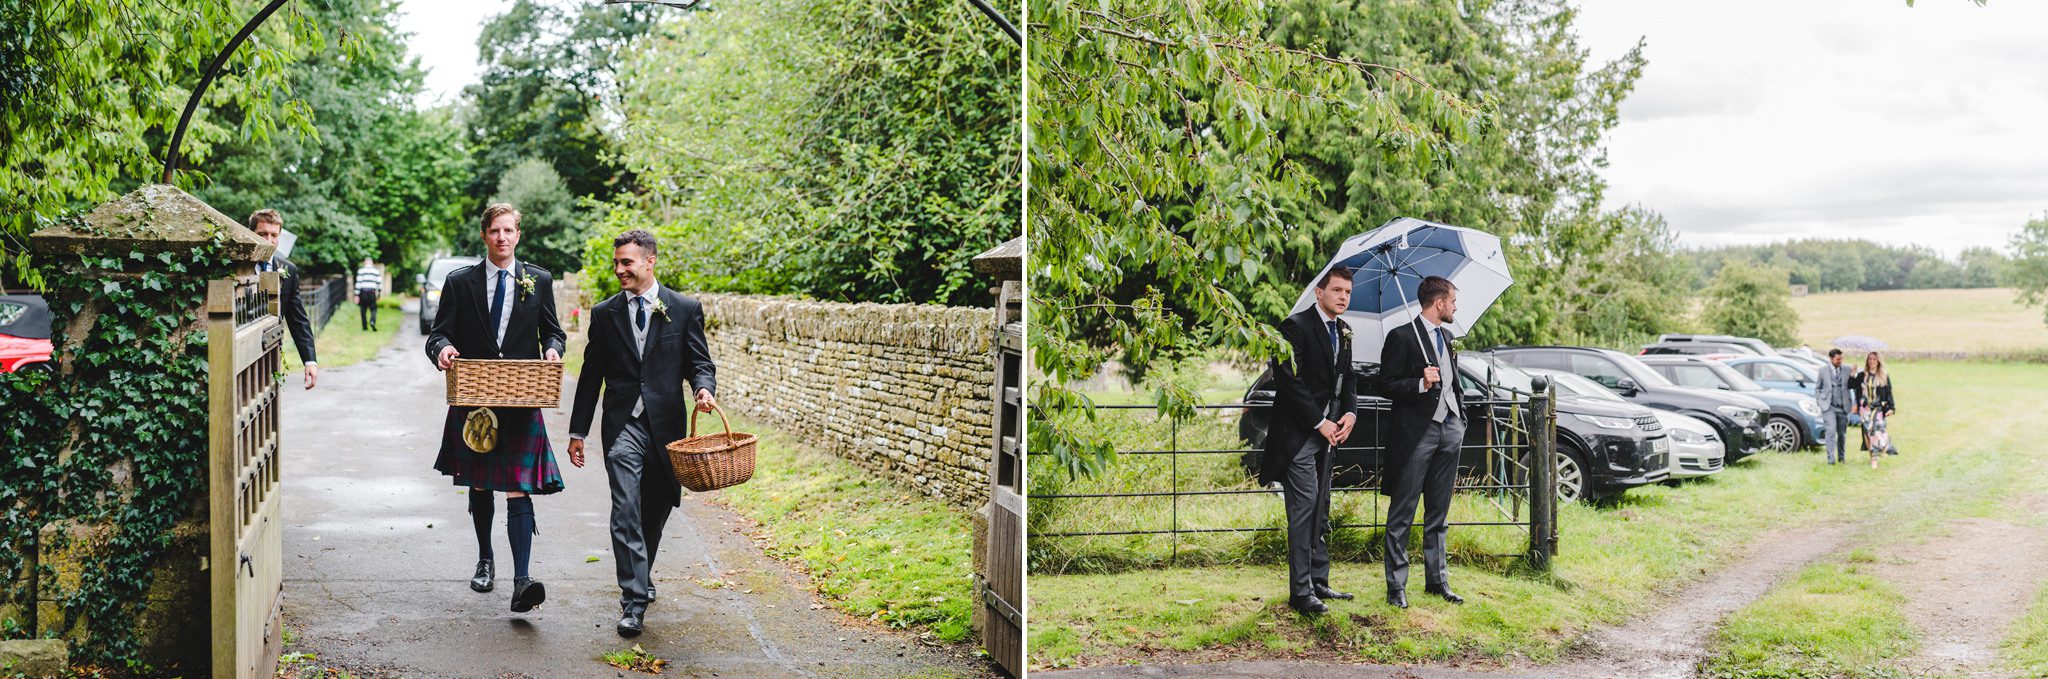 Groomsmen ushering before the wedding in tetbury by Bigeye Photography